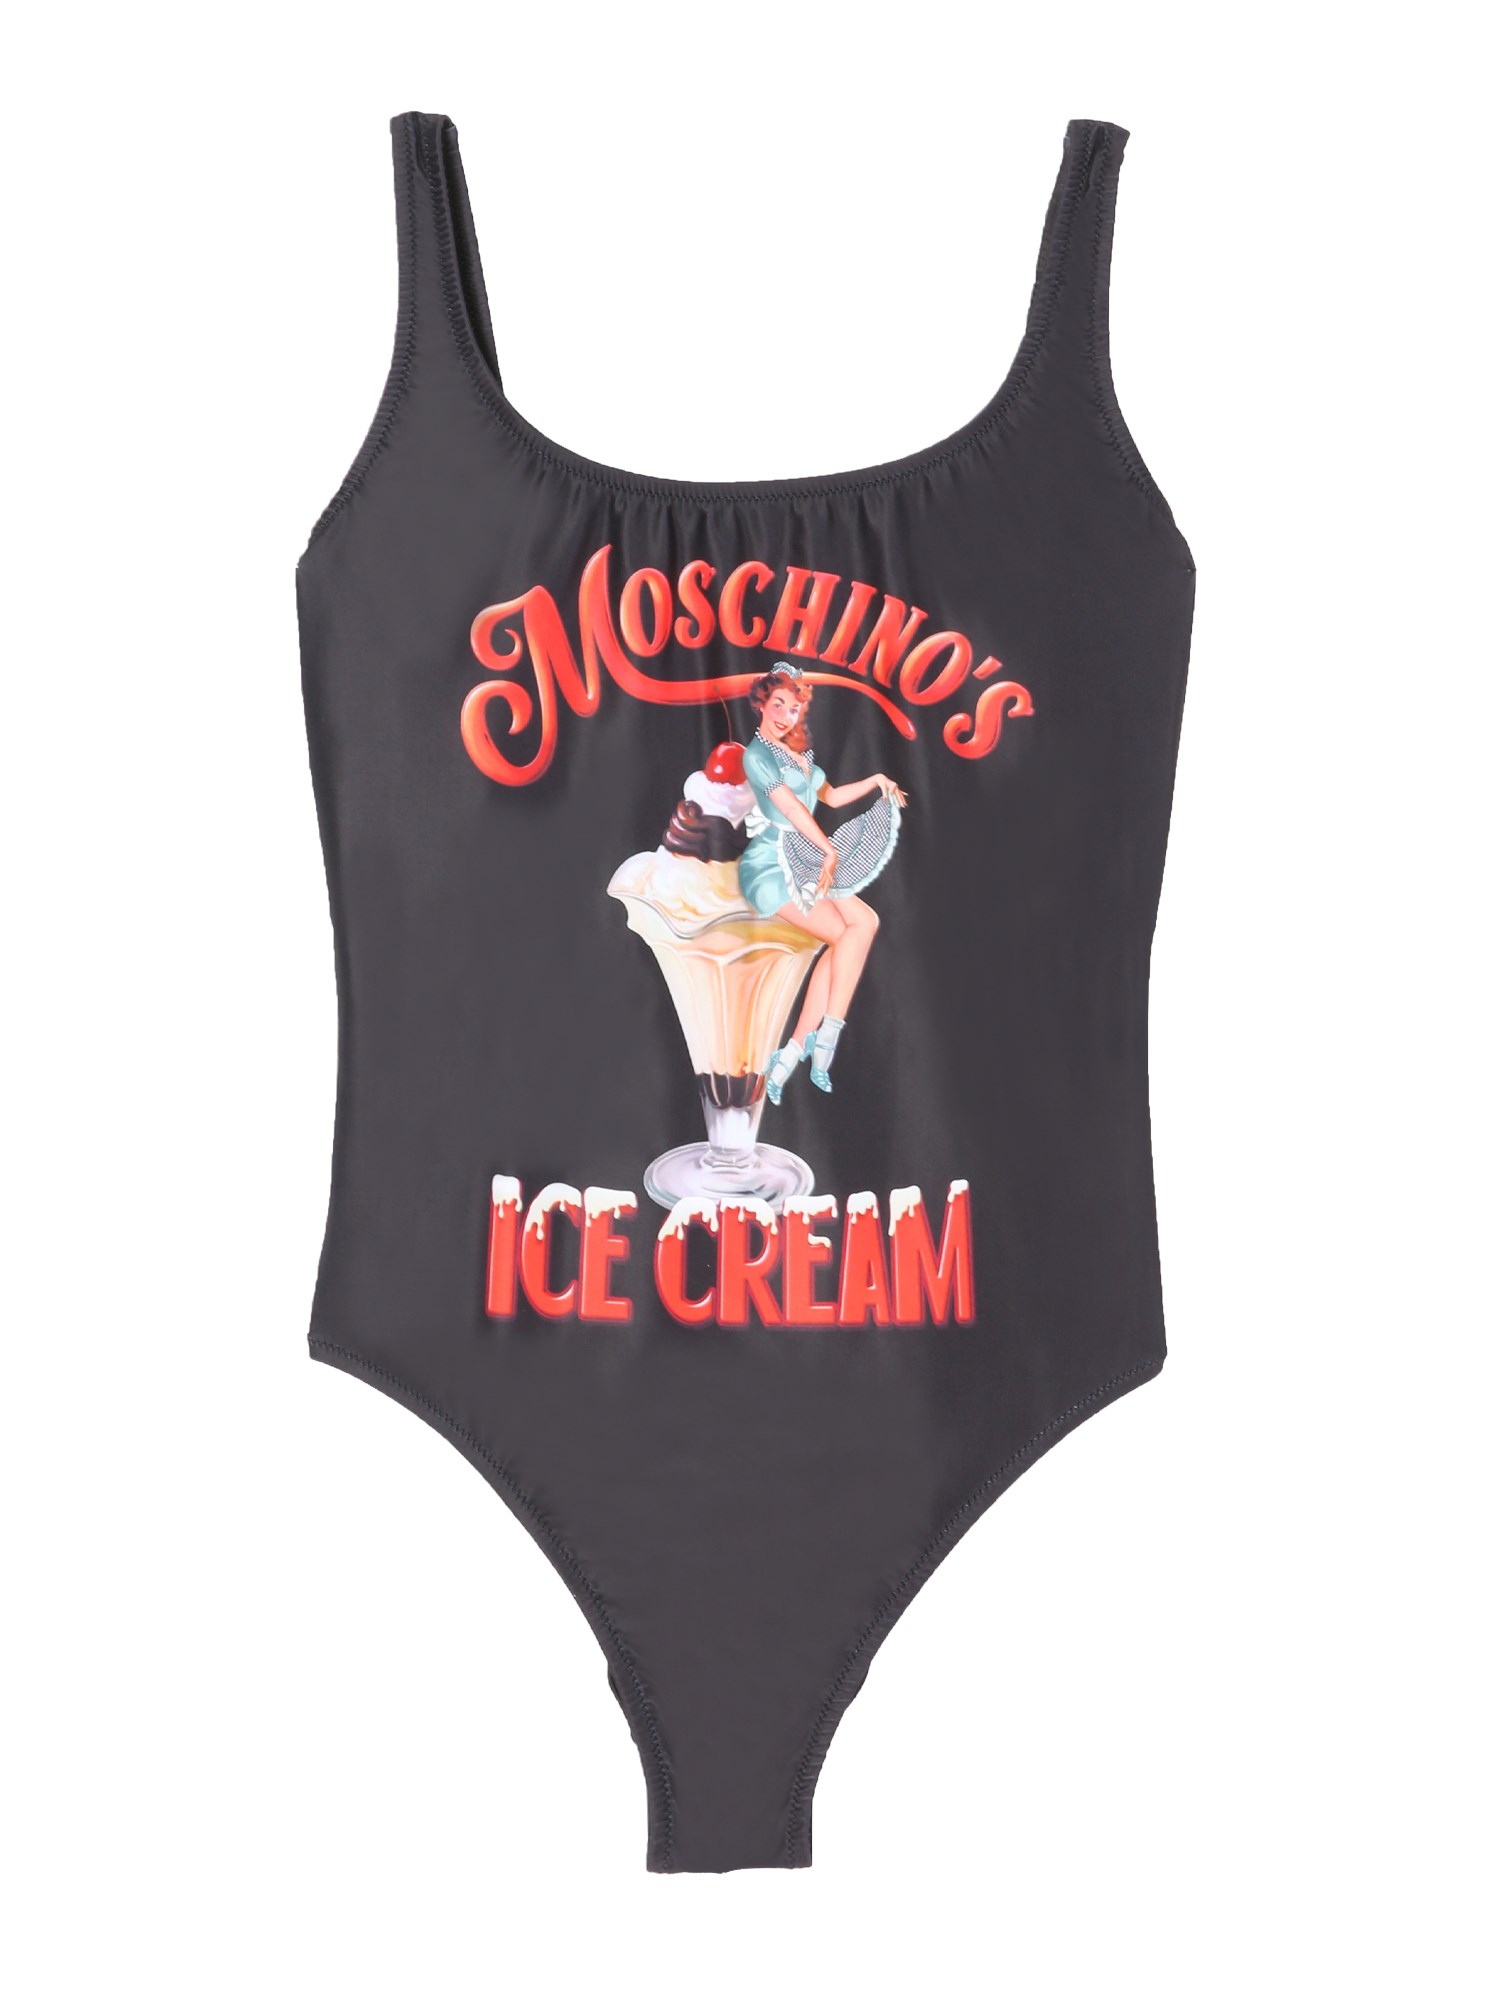 moschino "ice cream" one piece swimsuit